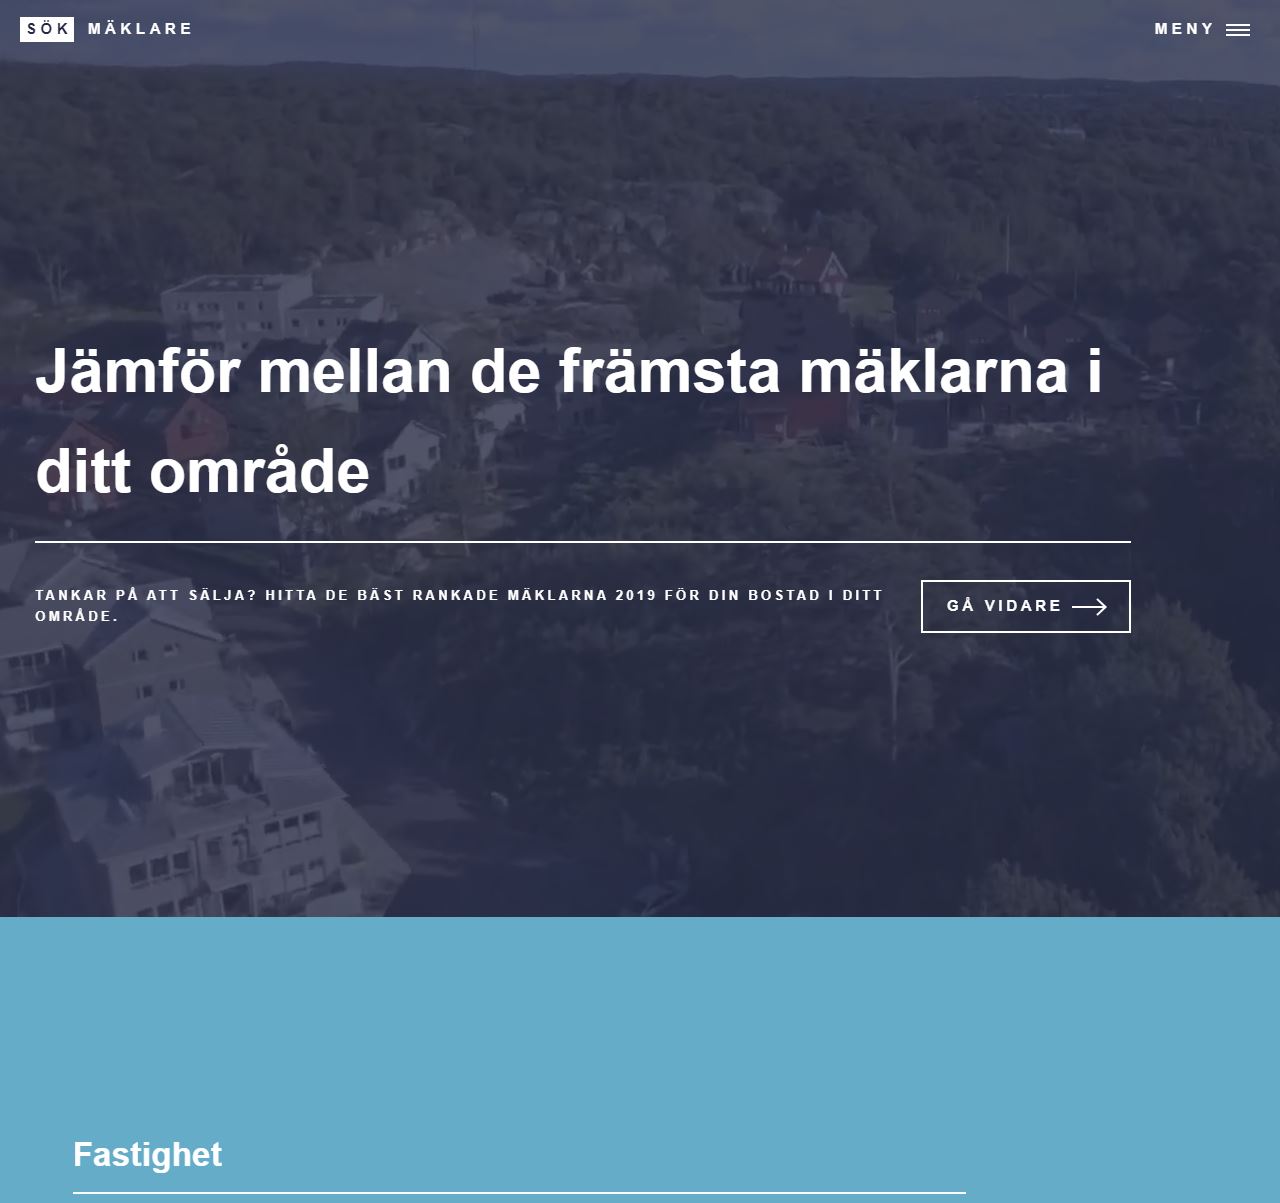 home screen of website